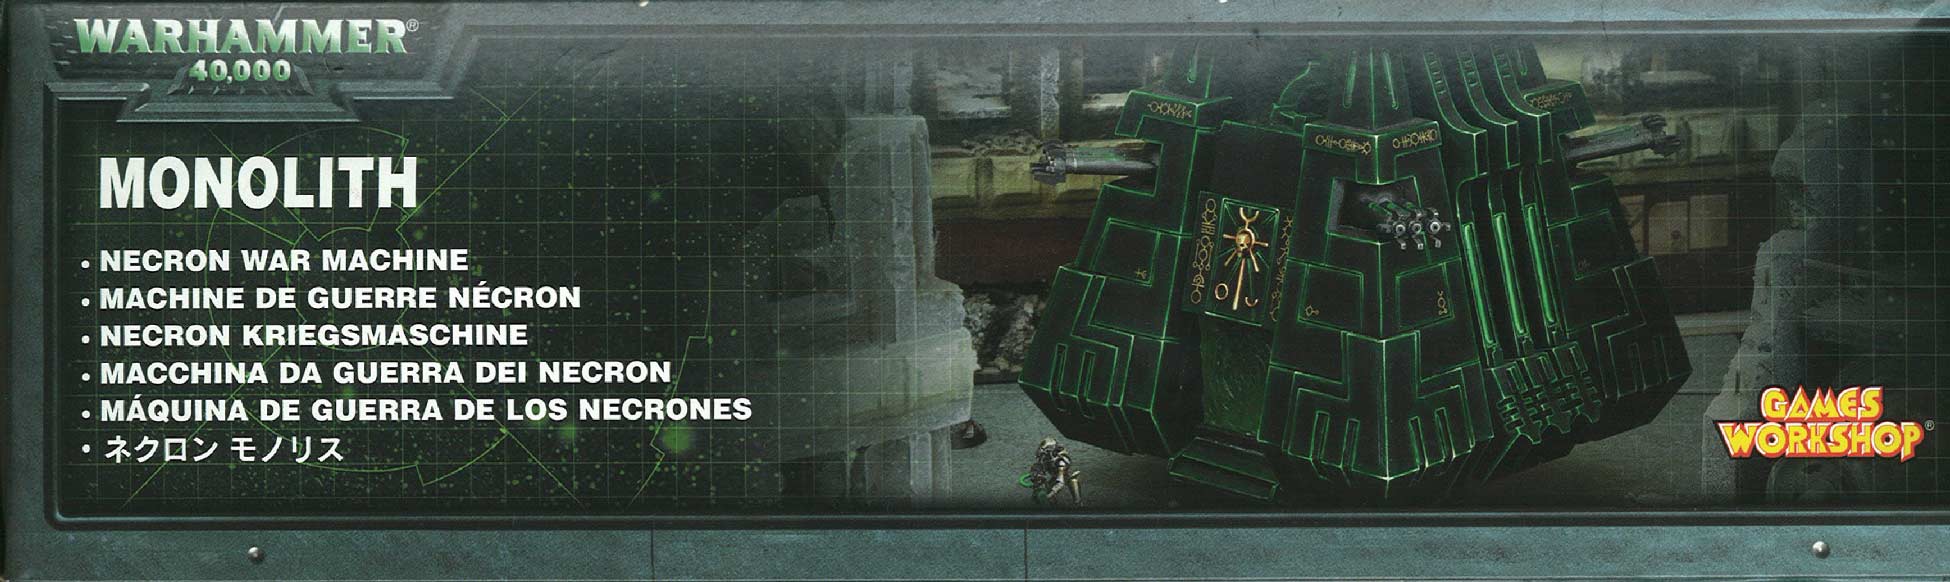 Côté dessus du packaging du Monolithe Nécron (Warhammer 40.000)